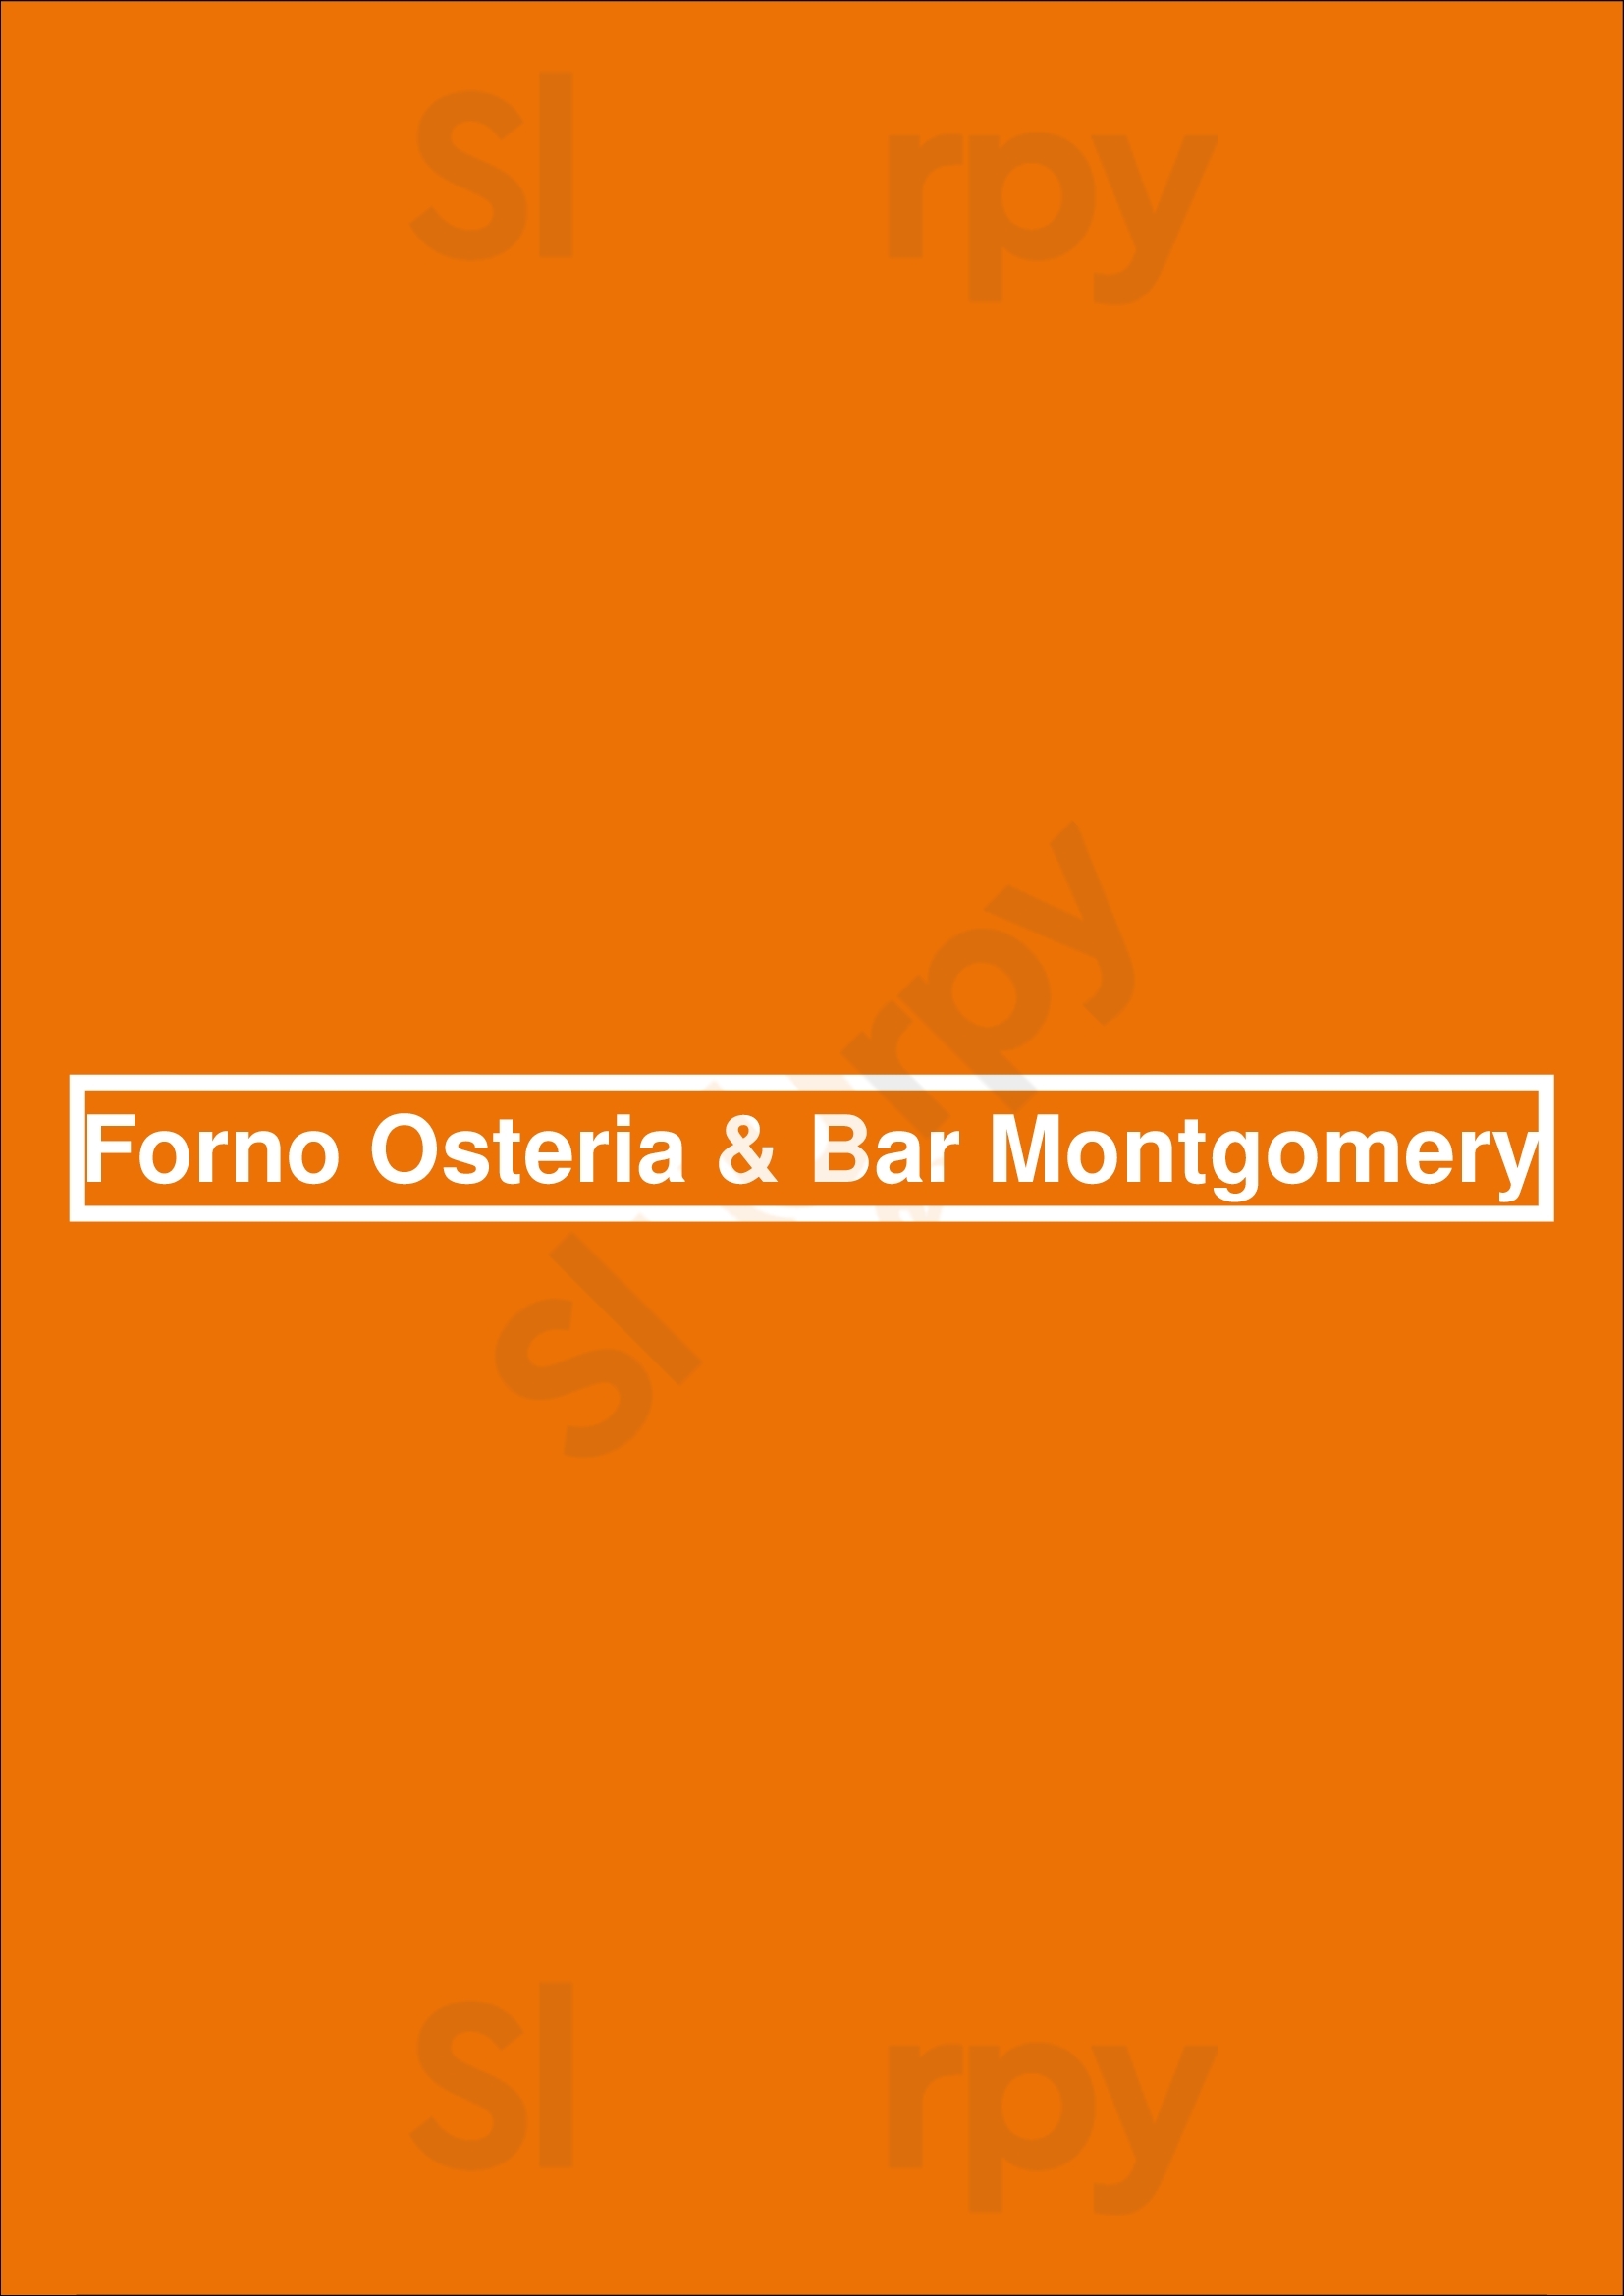 Forno Osteria & Bar Montgomery Cincinnati Menu - 1